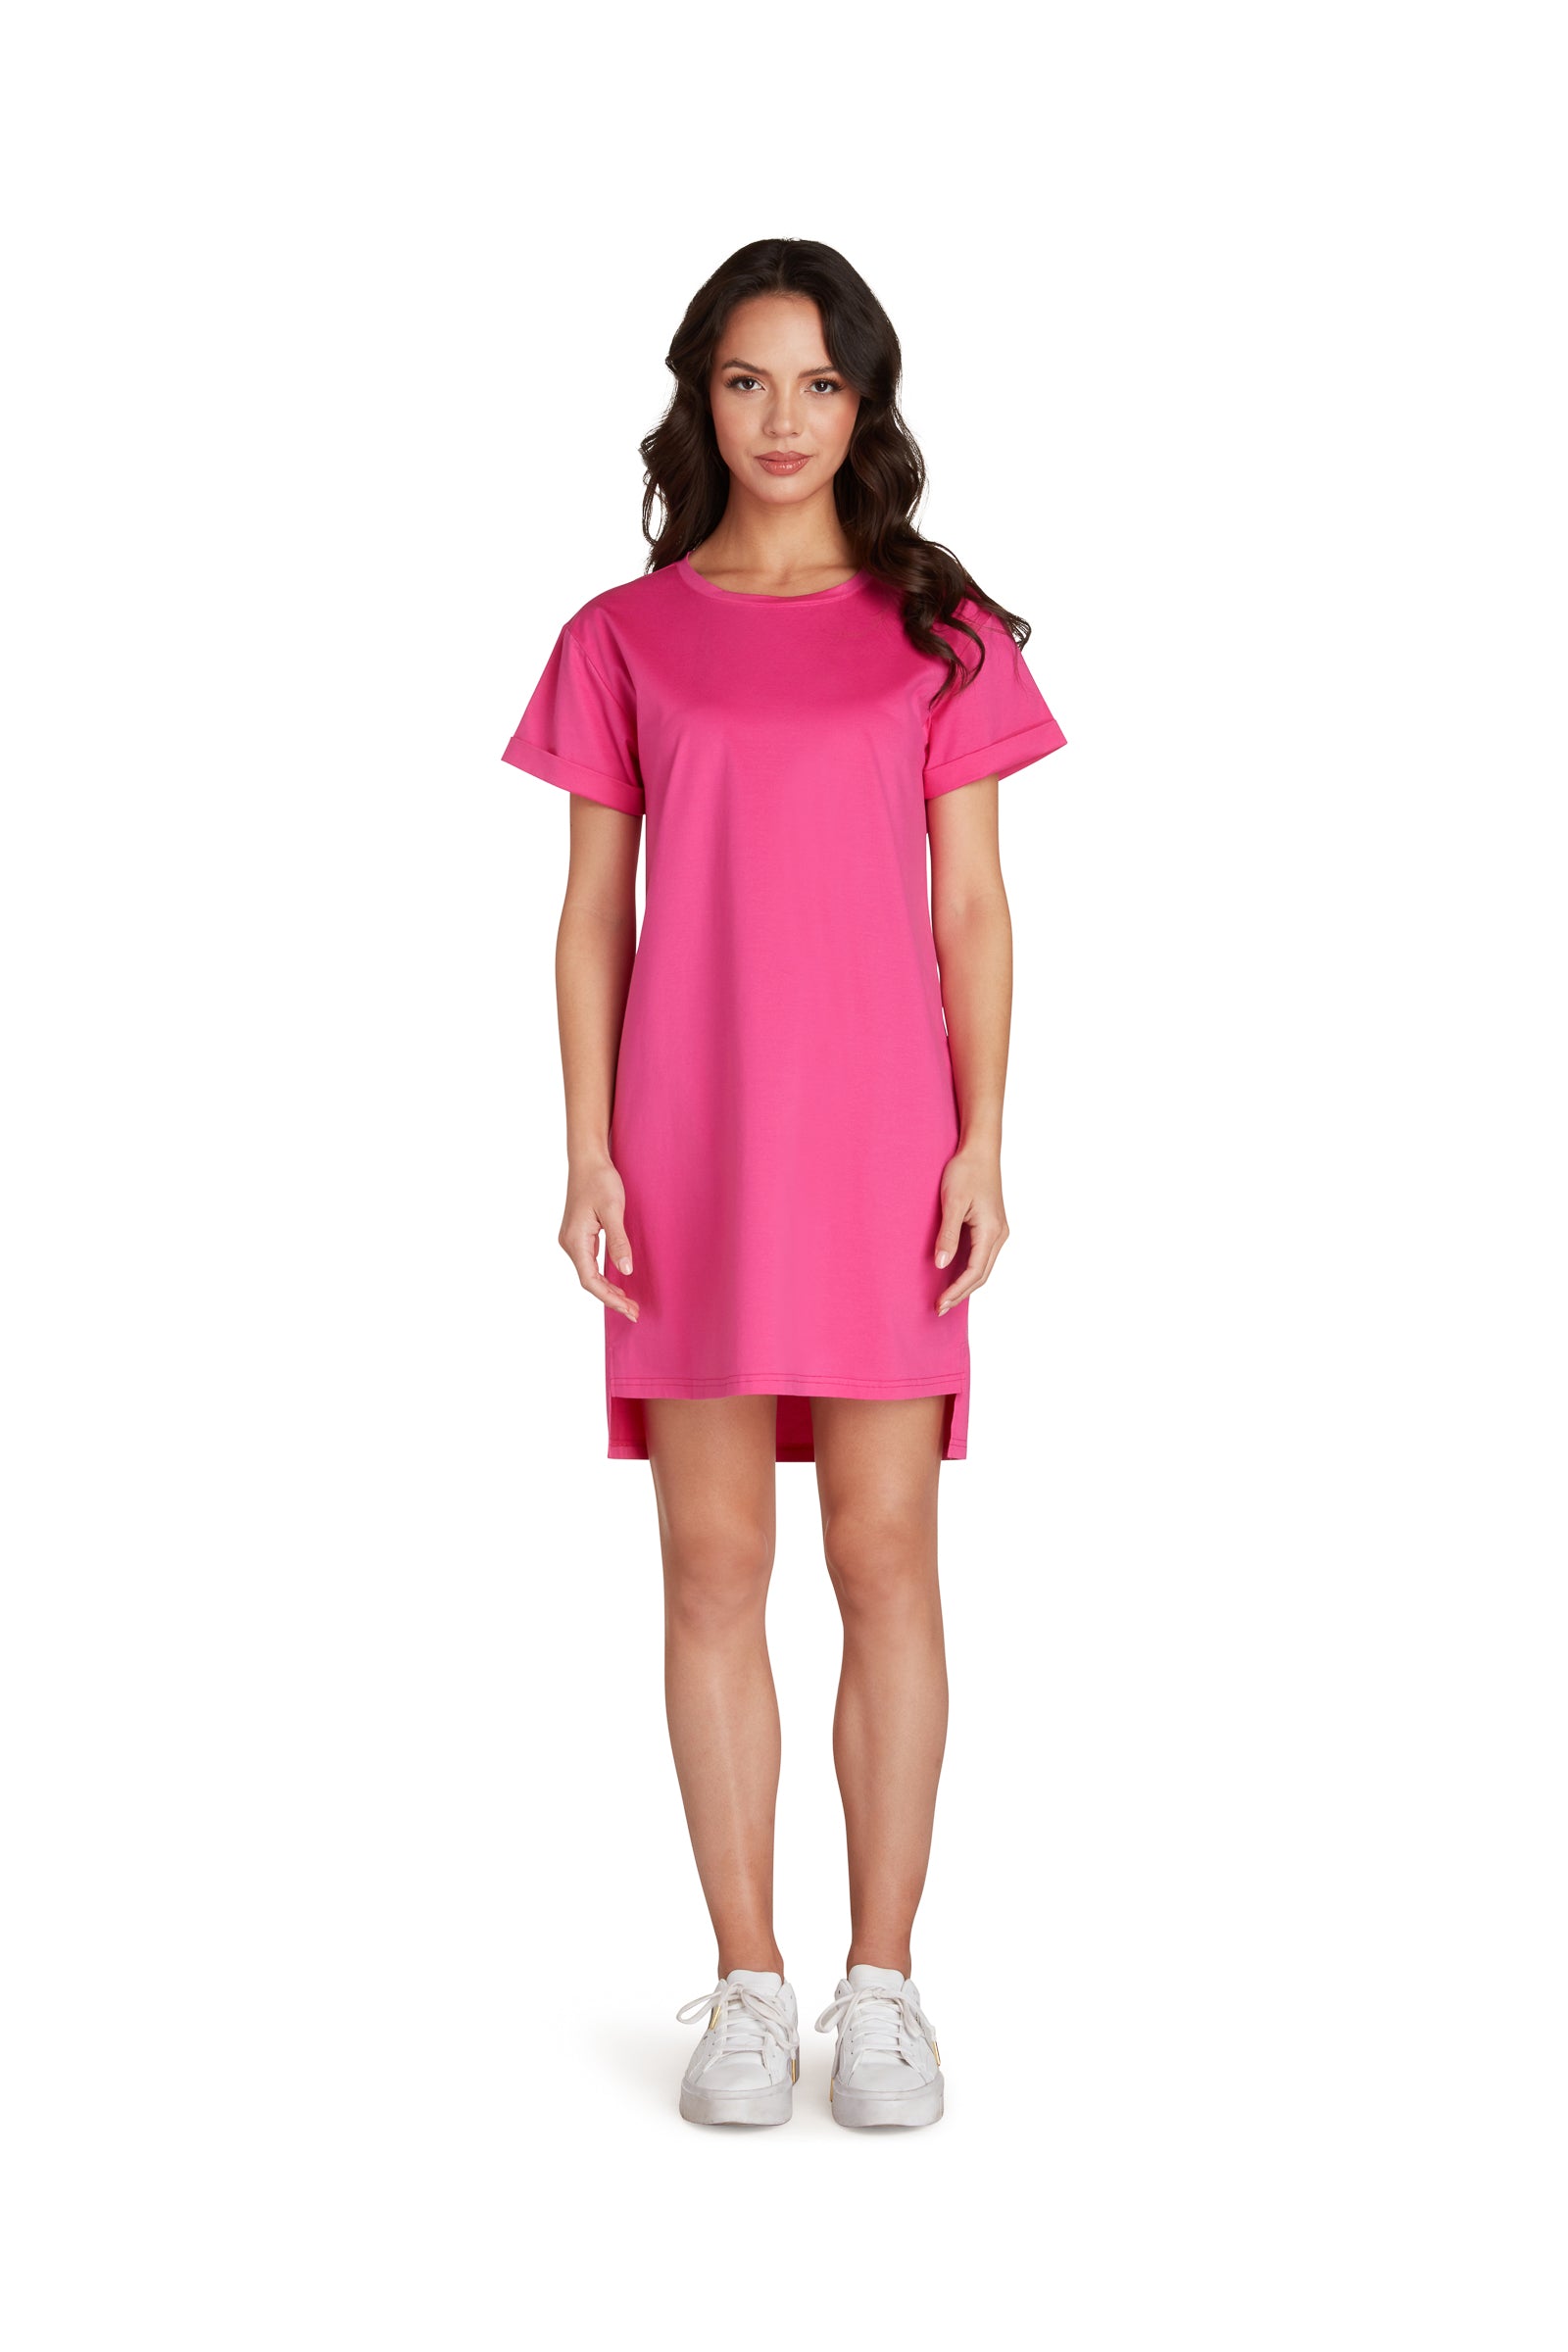 Jayden T-Shirt Dress in Raspberry Rose - Ladaire